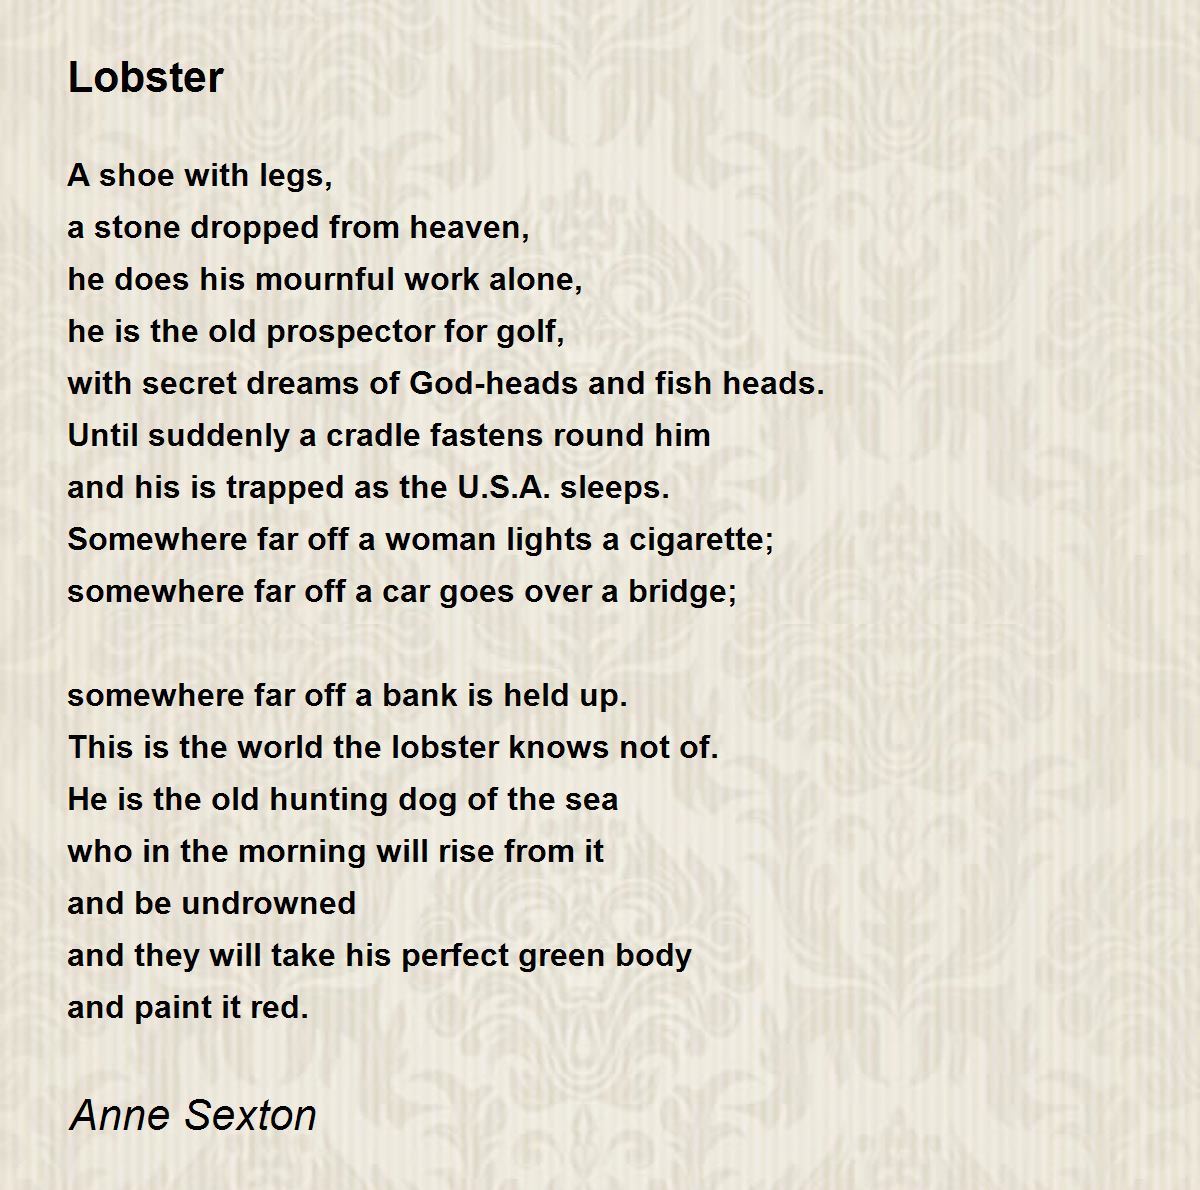 anne sexton poem analysis